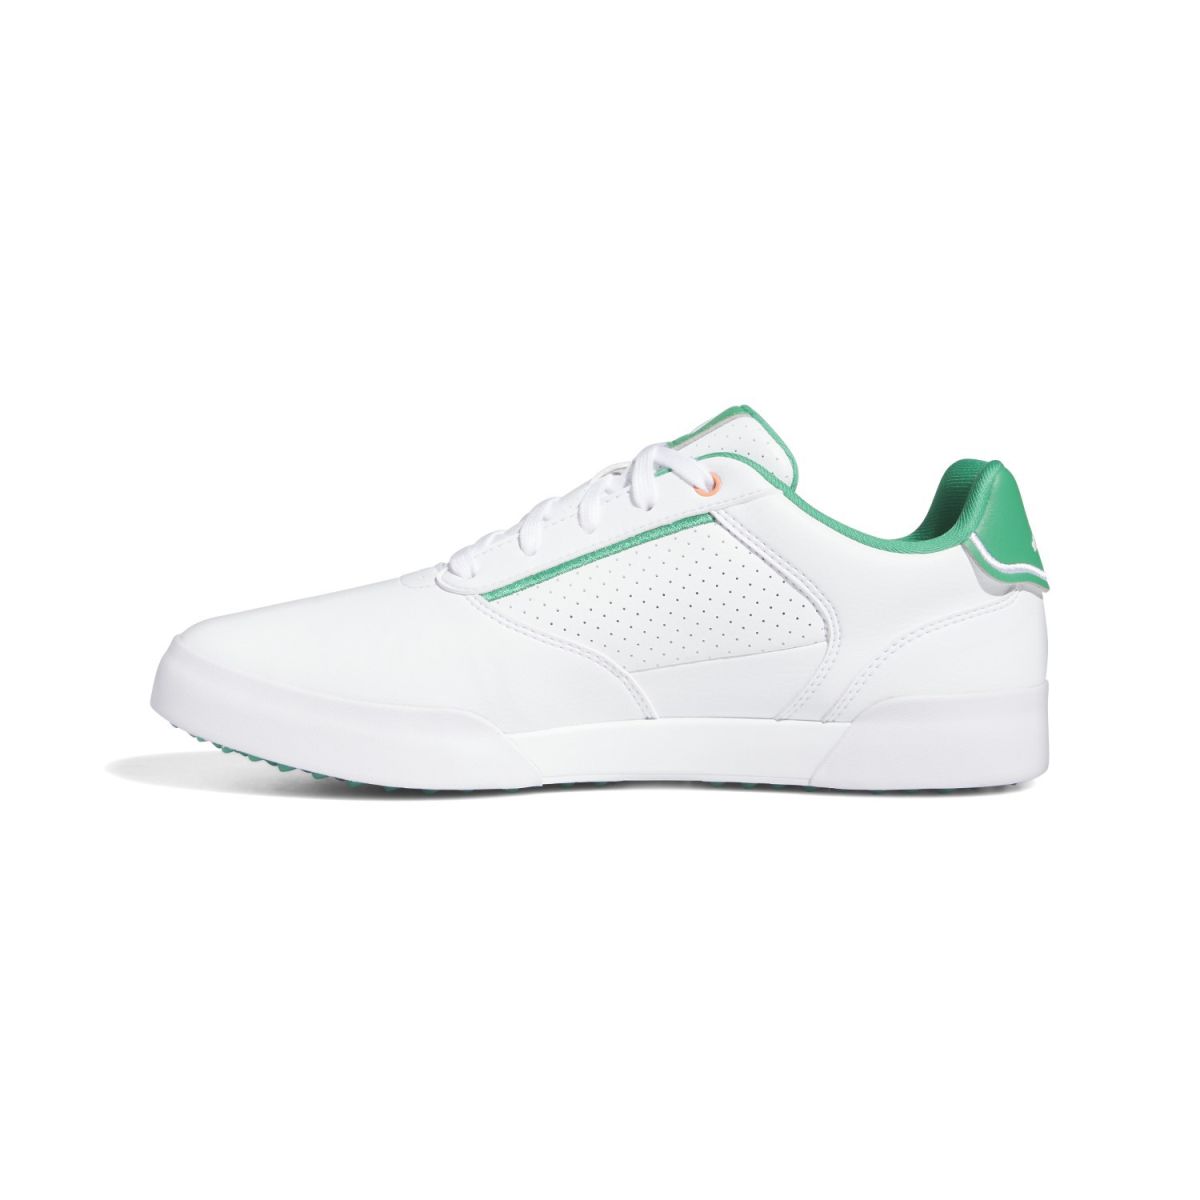 adidas retrocross white green 47 13